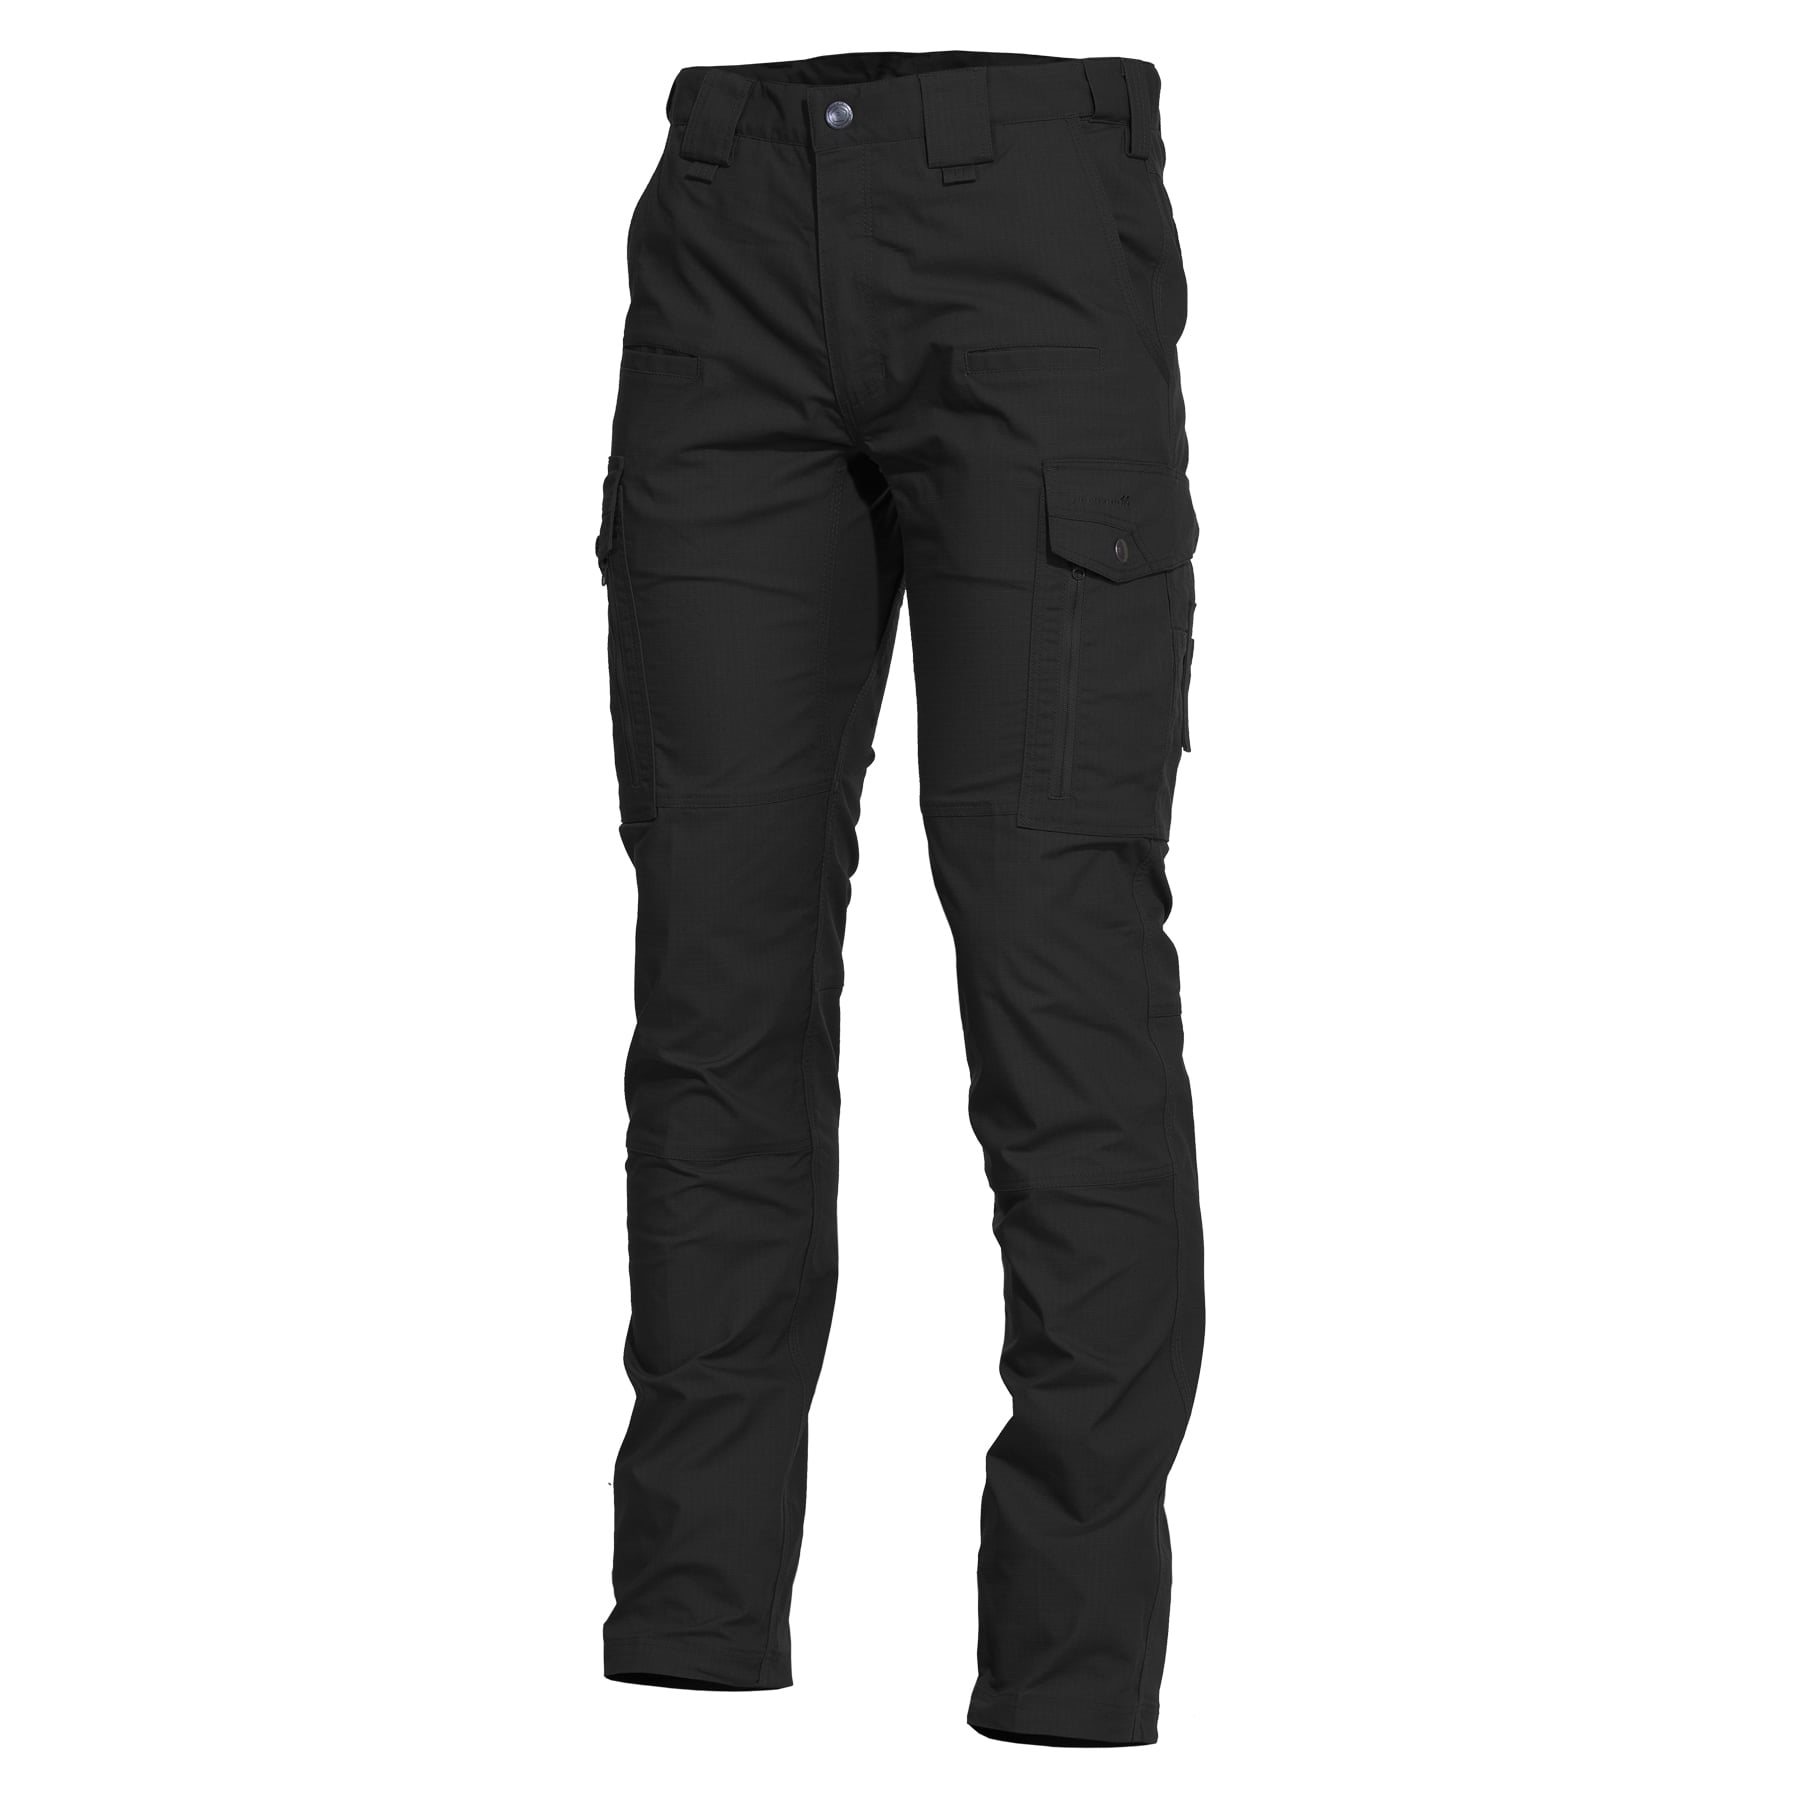 Pants RANGER 2.0 BLACK PENTAGON K05007-2.0-01 L-11